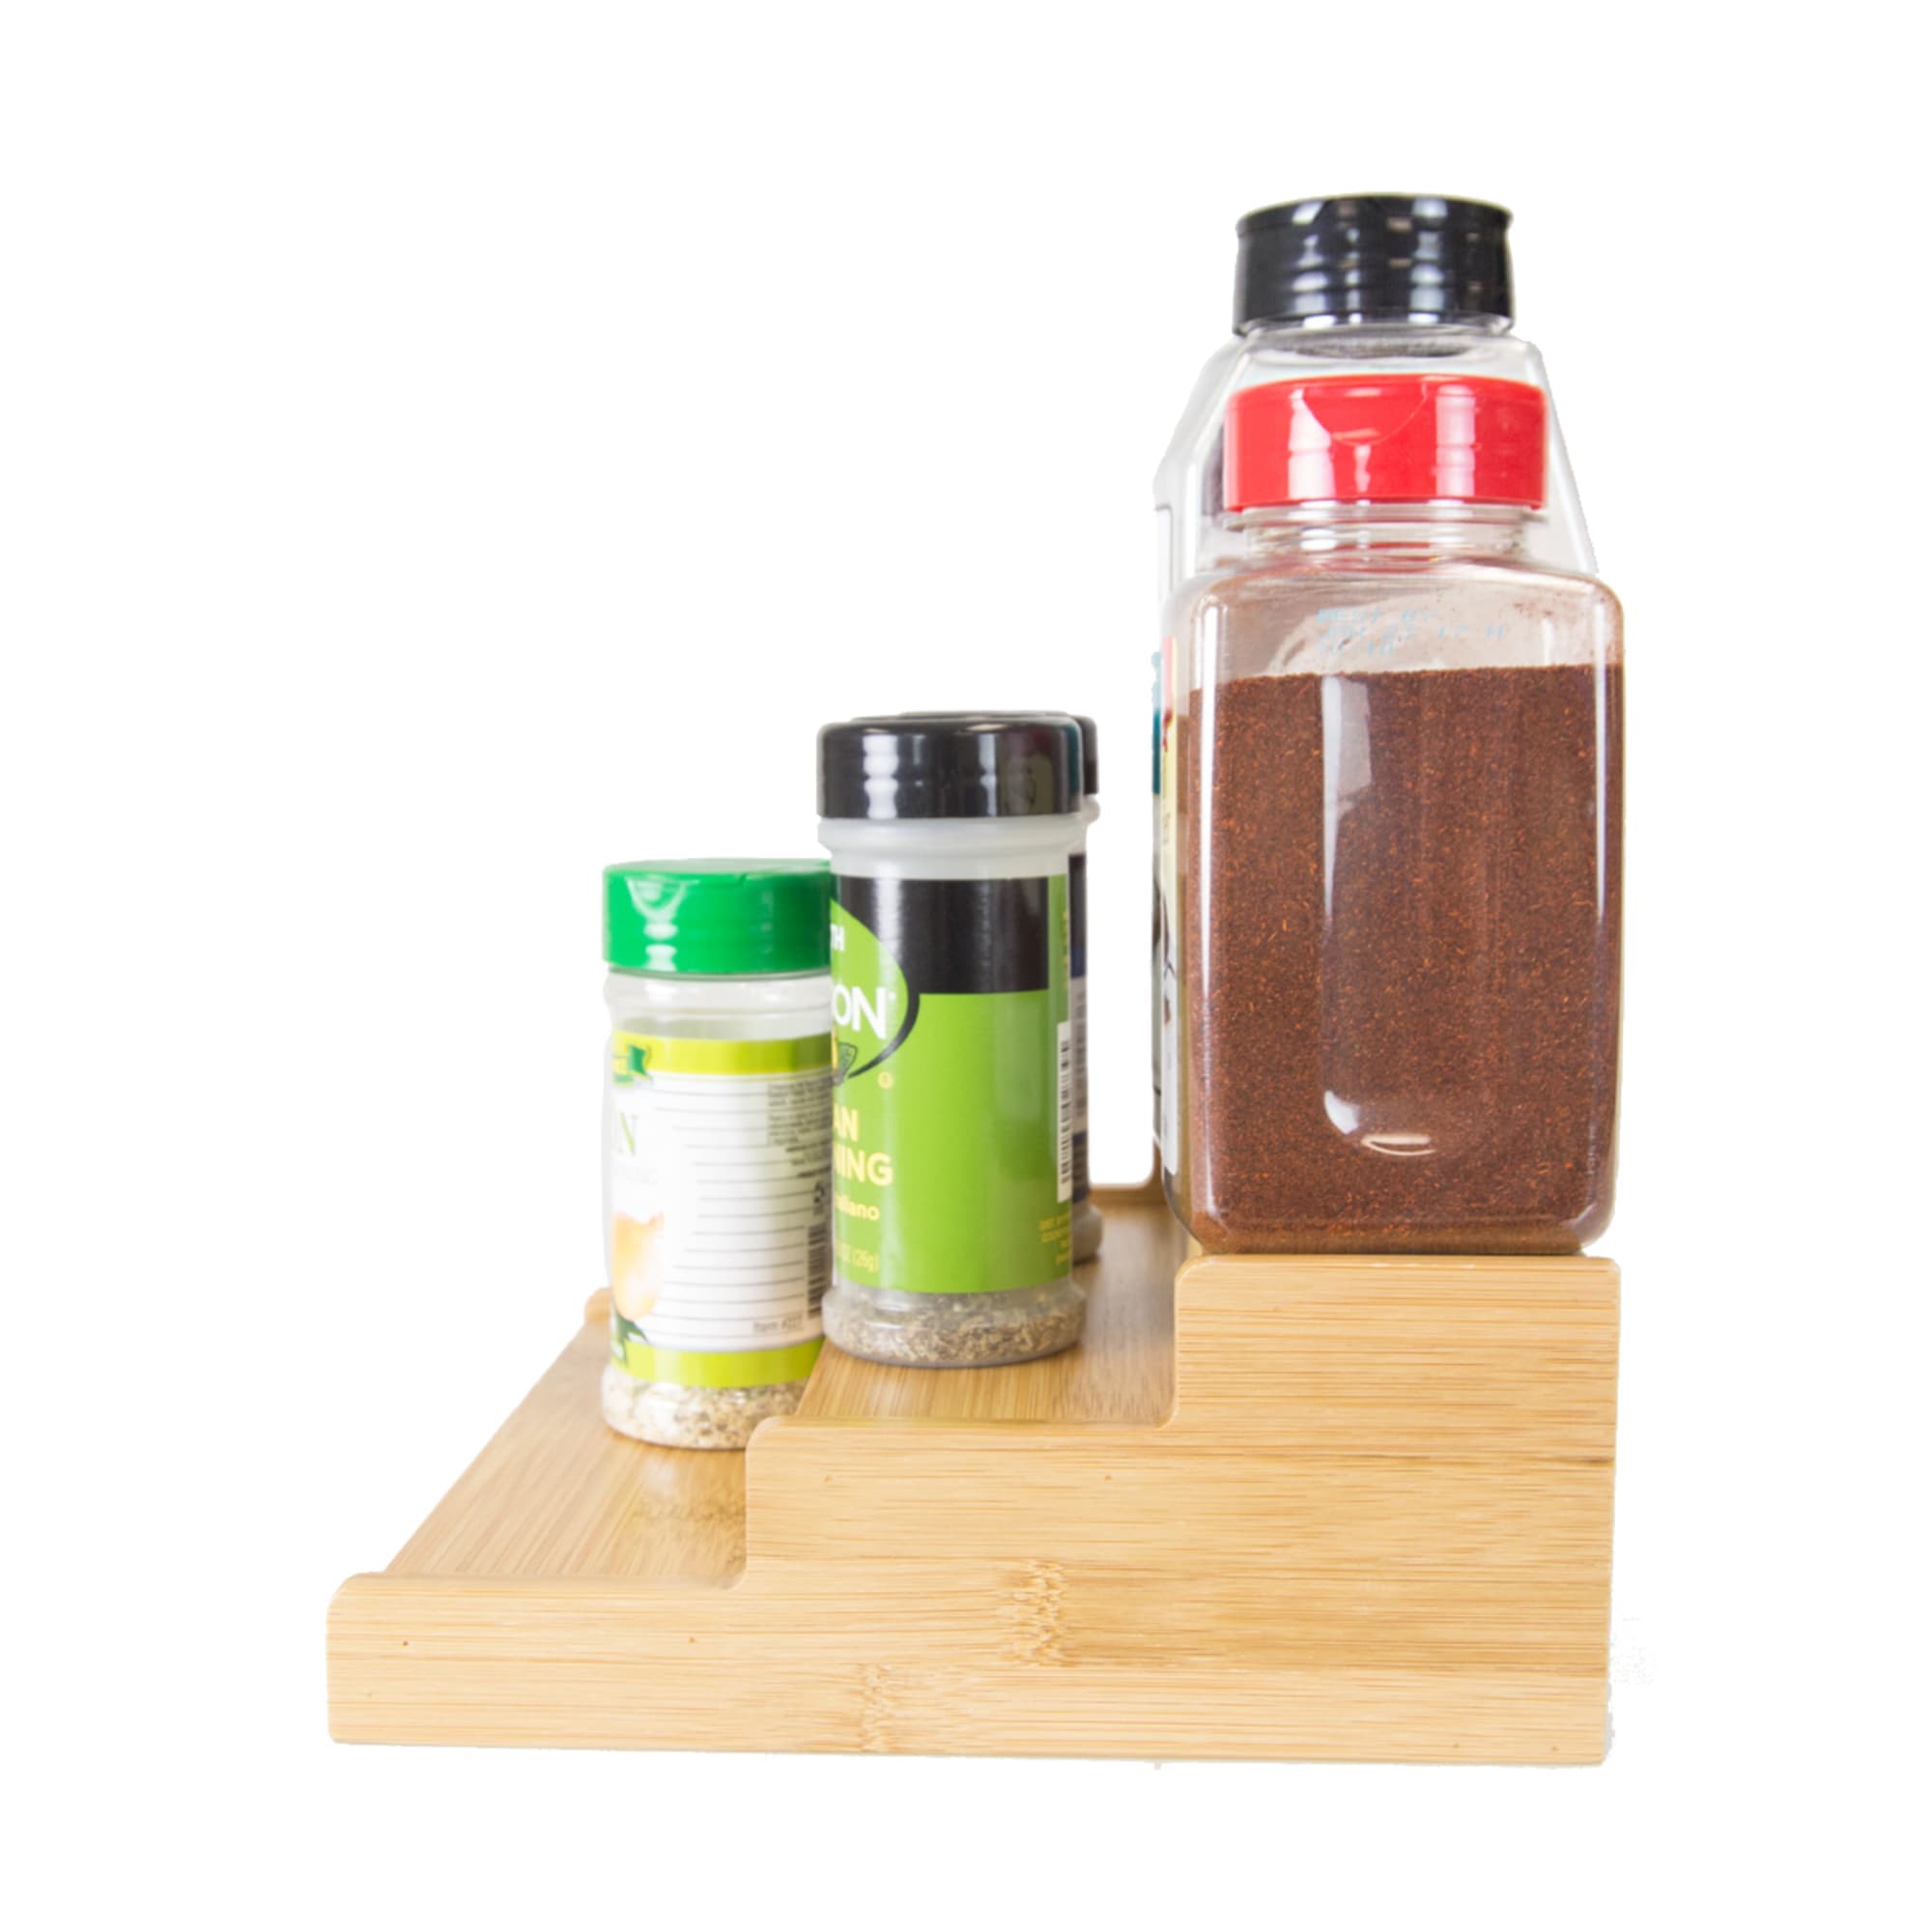 Adjustable 3 Tier Bamboo Spice Rack Organizer Natural | Honey-Can-Do